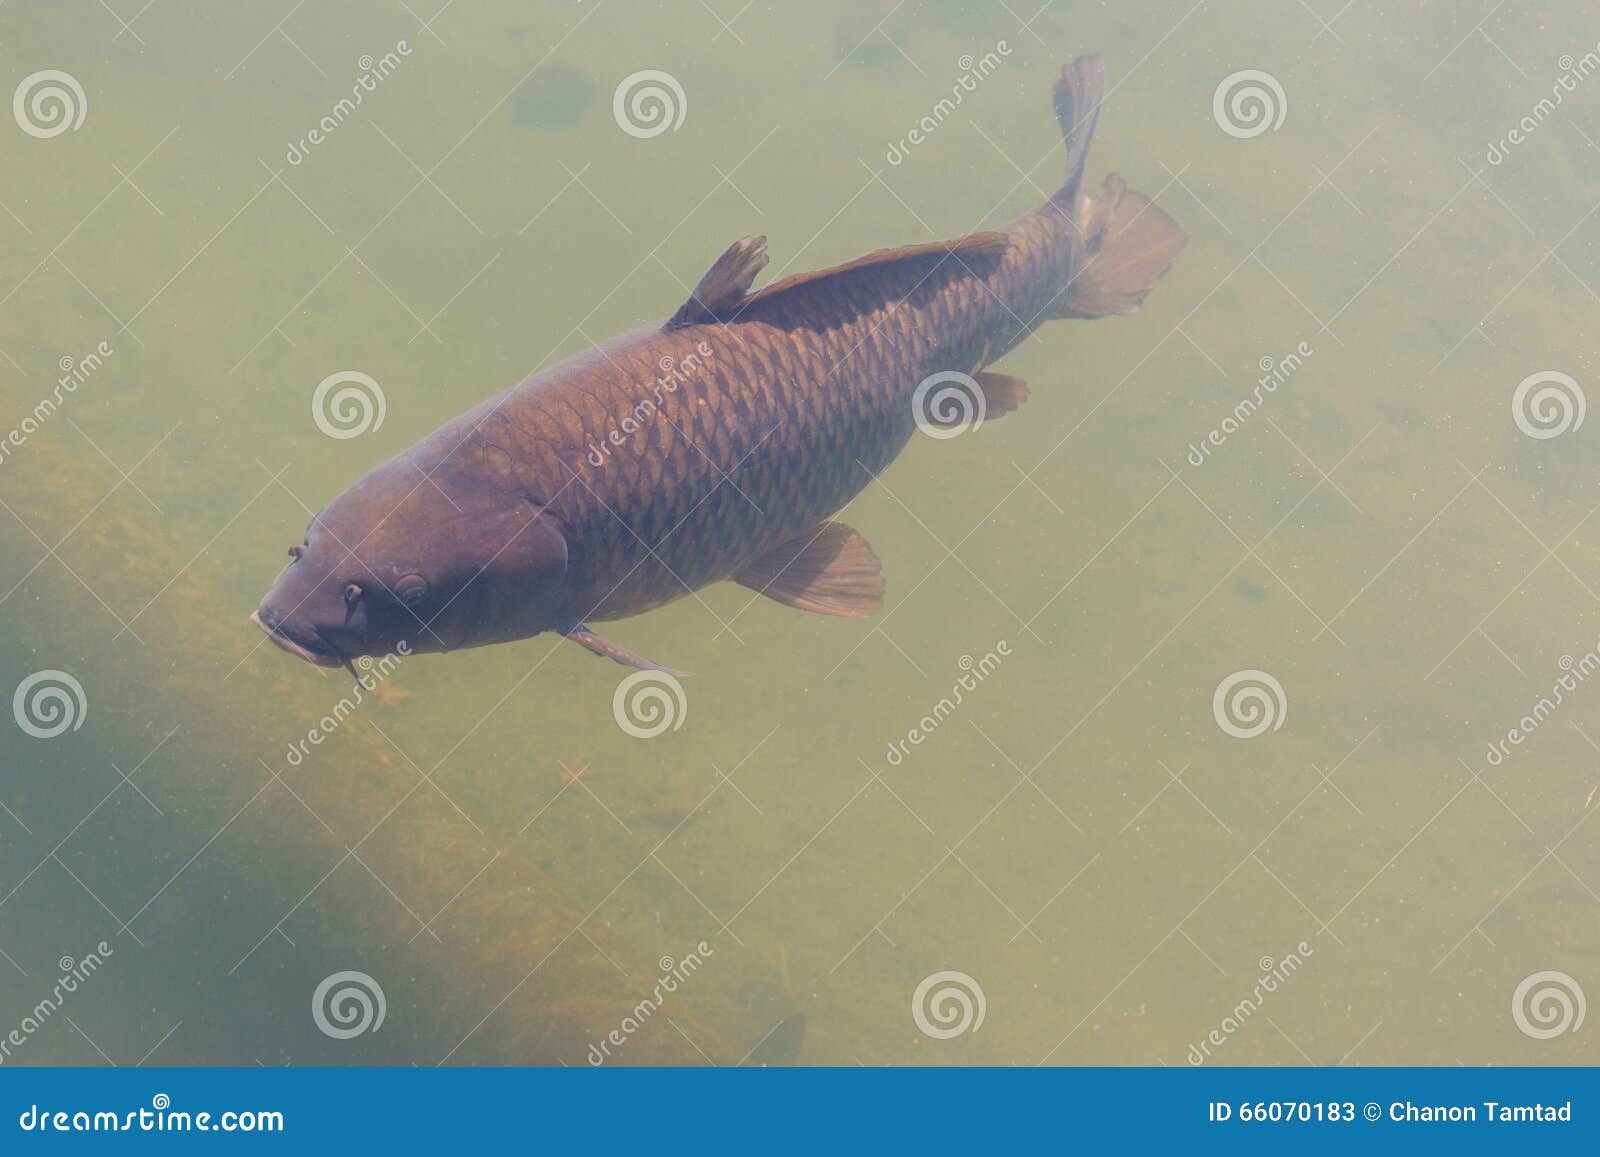 Black koi fish swimming. stock image. Image of garden